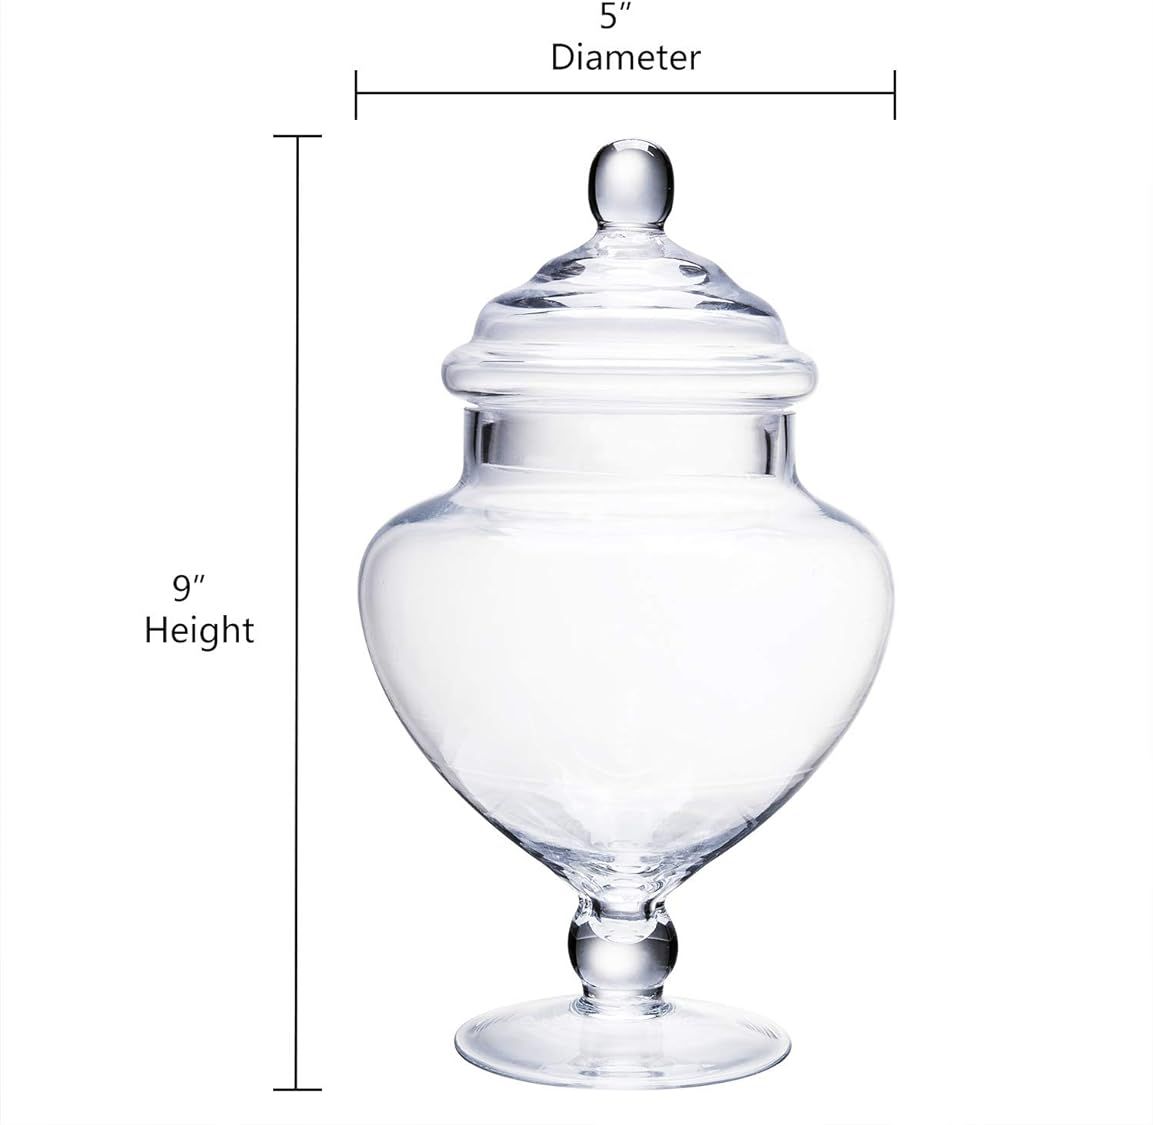 Diamond Star Clear Glass Apothecary Jars, Candy Buffet Display, Elegant Storage Jar, Decorative Wedd | Amazon (US)